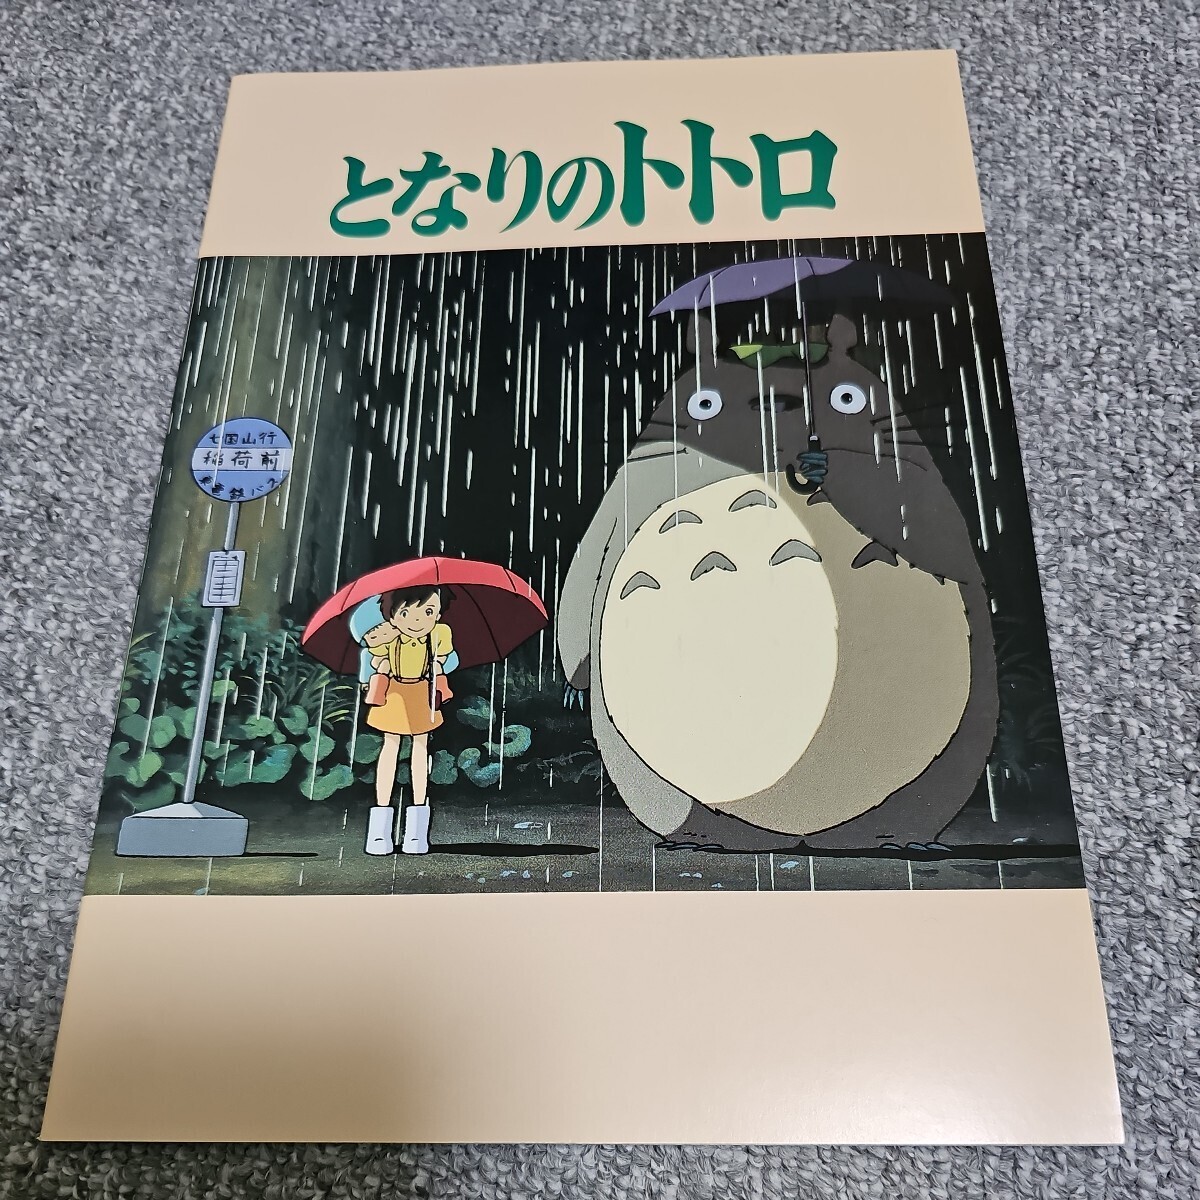  фильм проспект [ Tonari no Totoro ] Studio Ghibli Miyazaki .